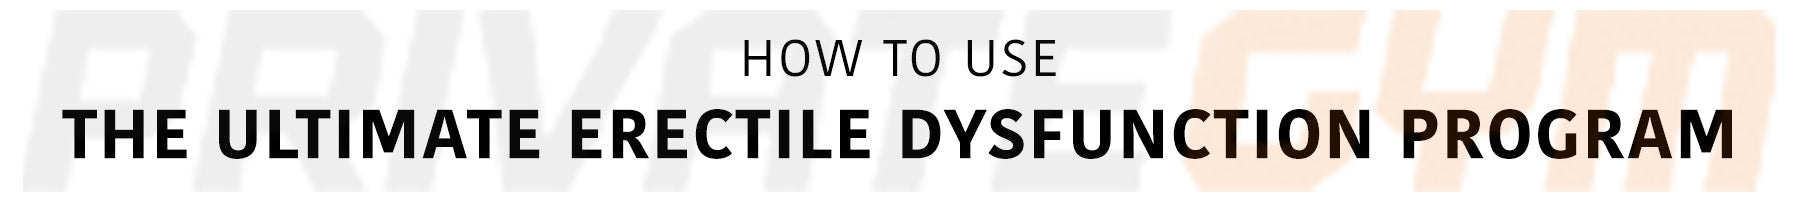 How to Use the Ultimate Erectile Dysfunction Program Header Desktop